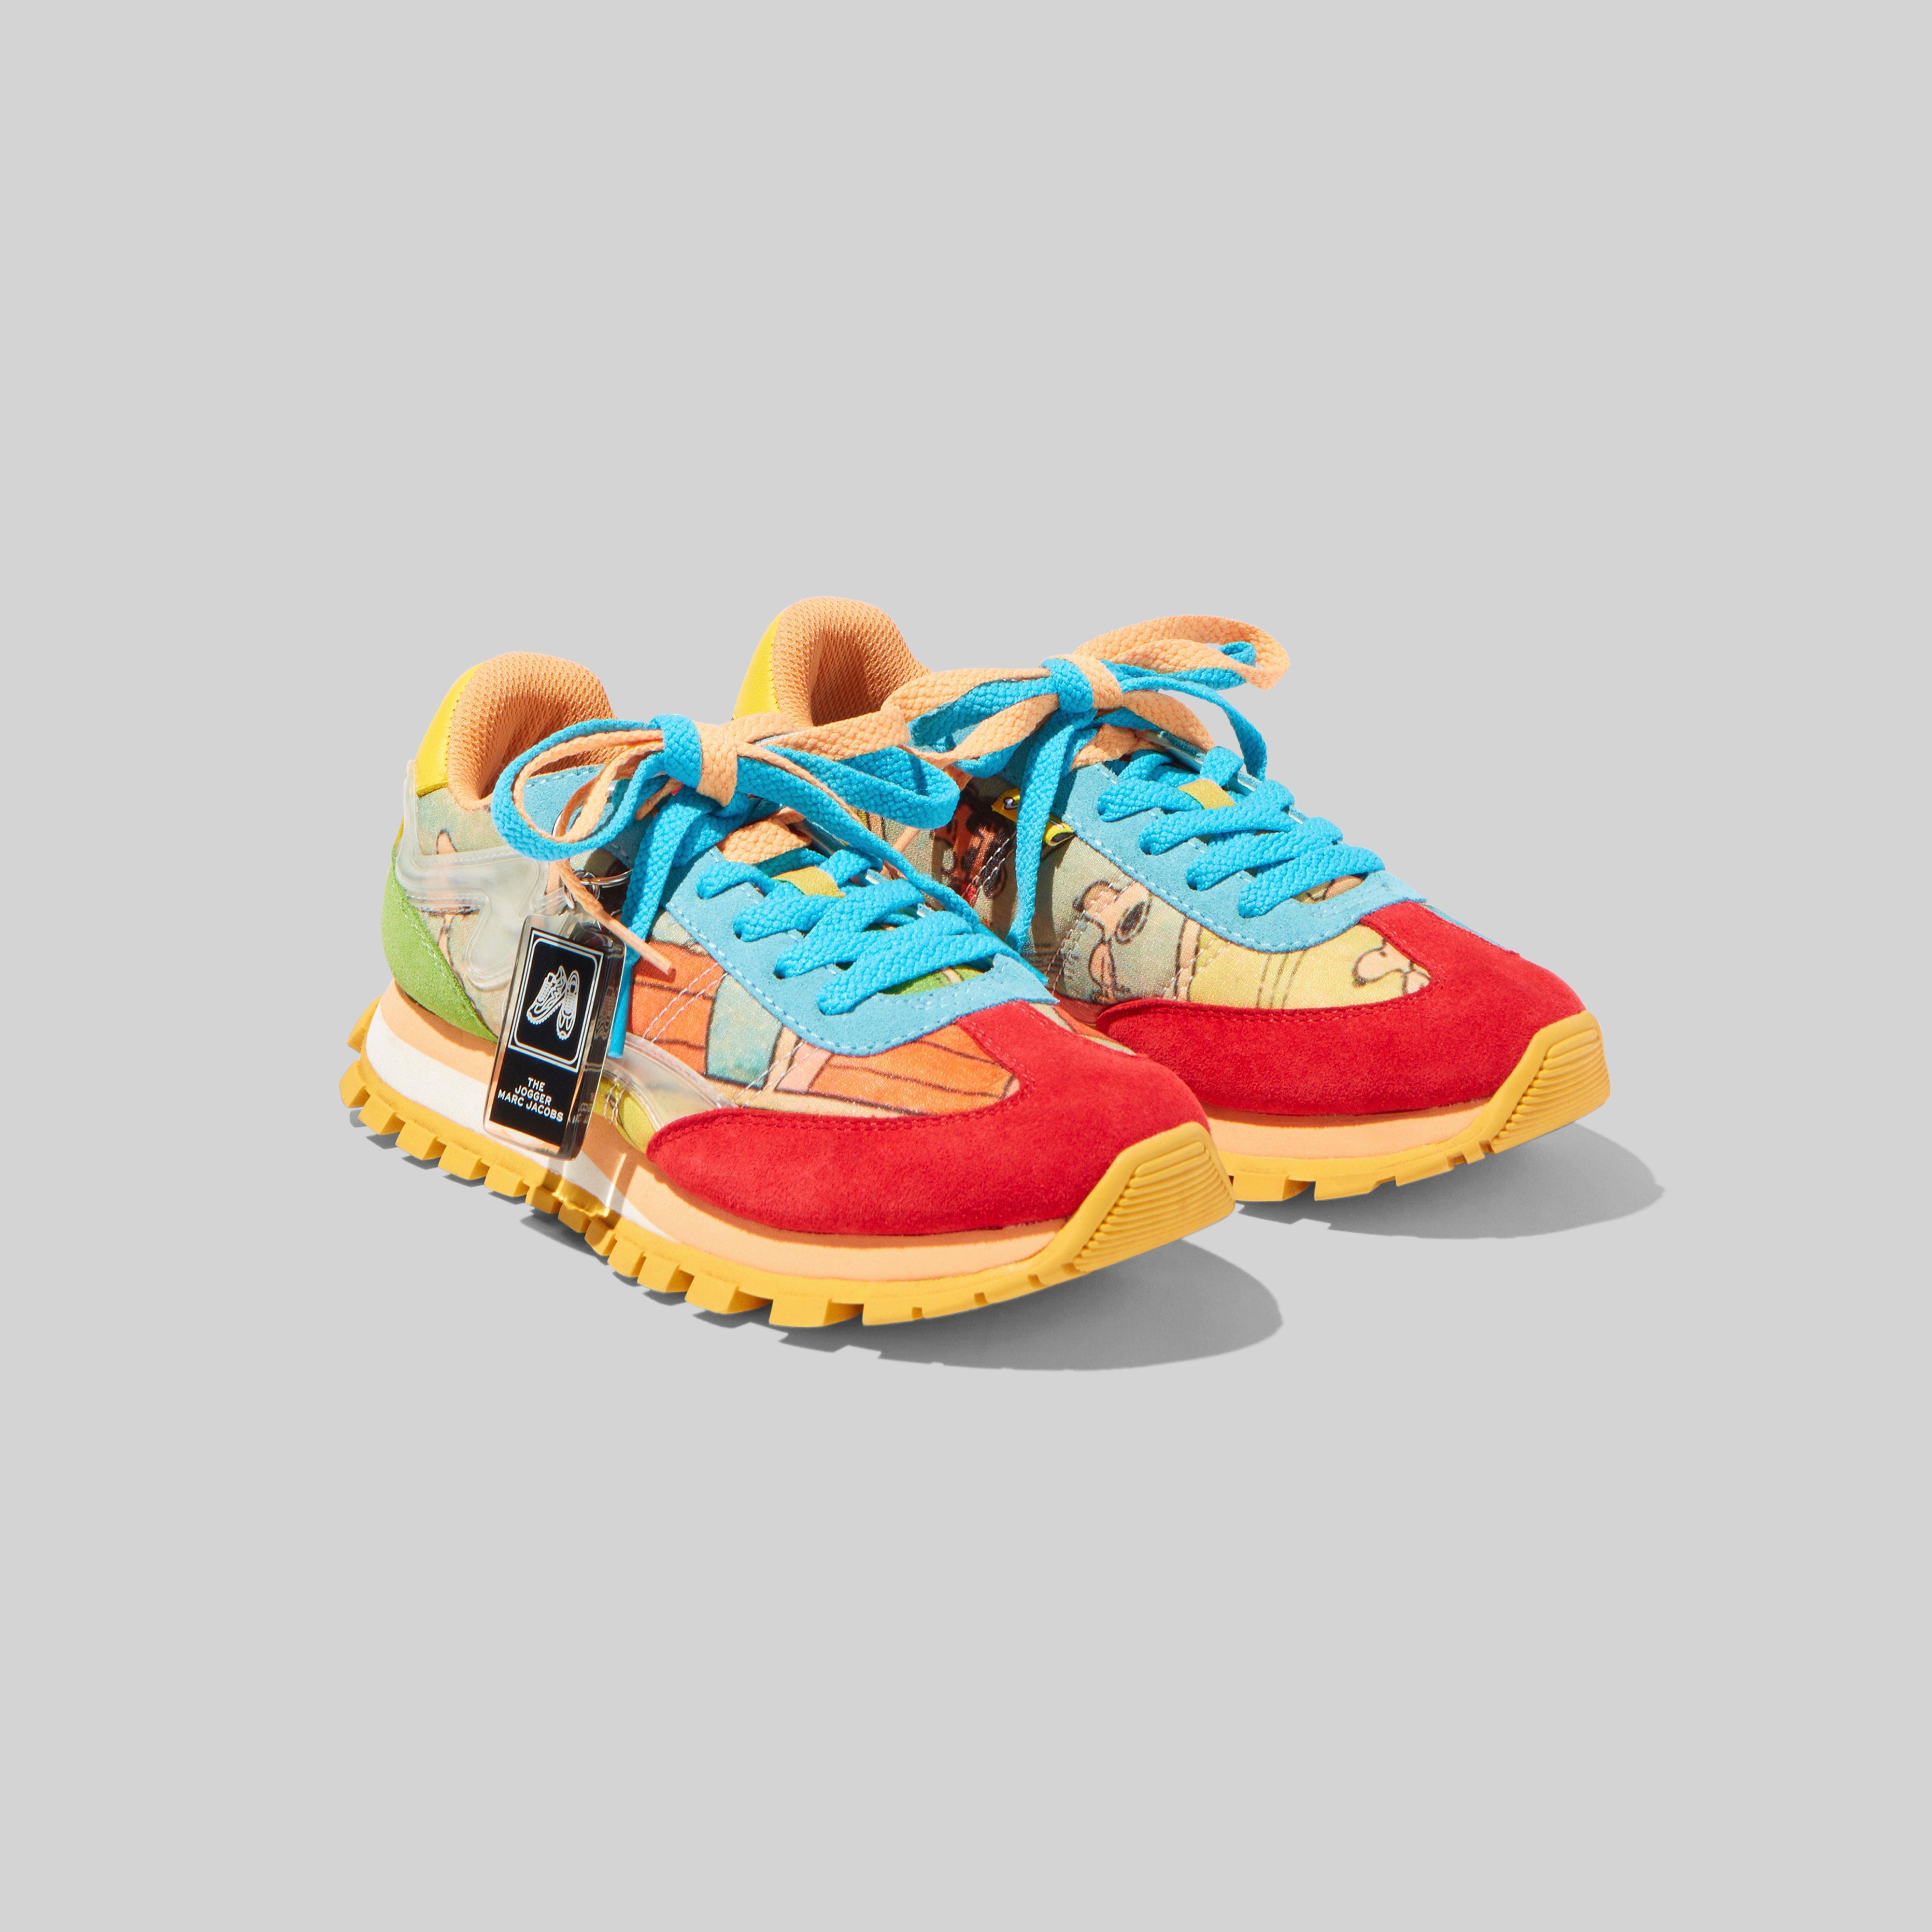 Marc Jacobs x Peanuts The Comics jogger sneakers - ShopStyle